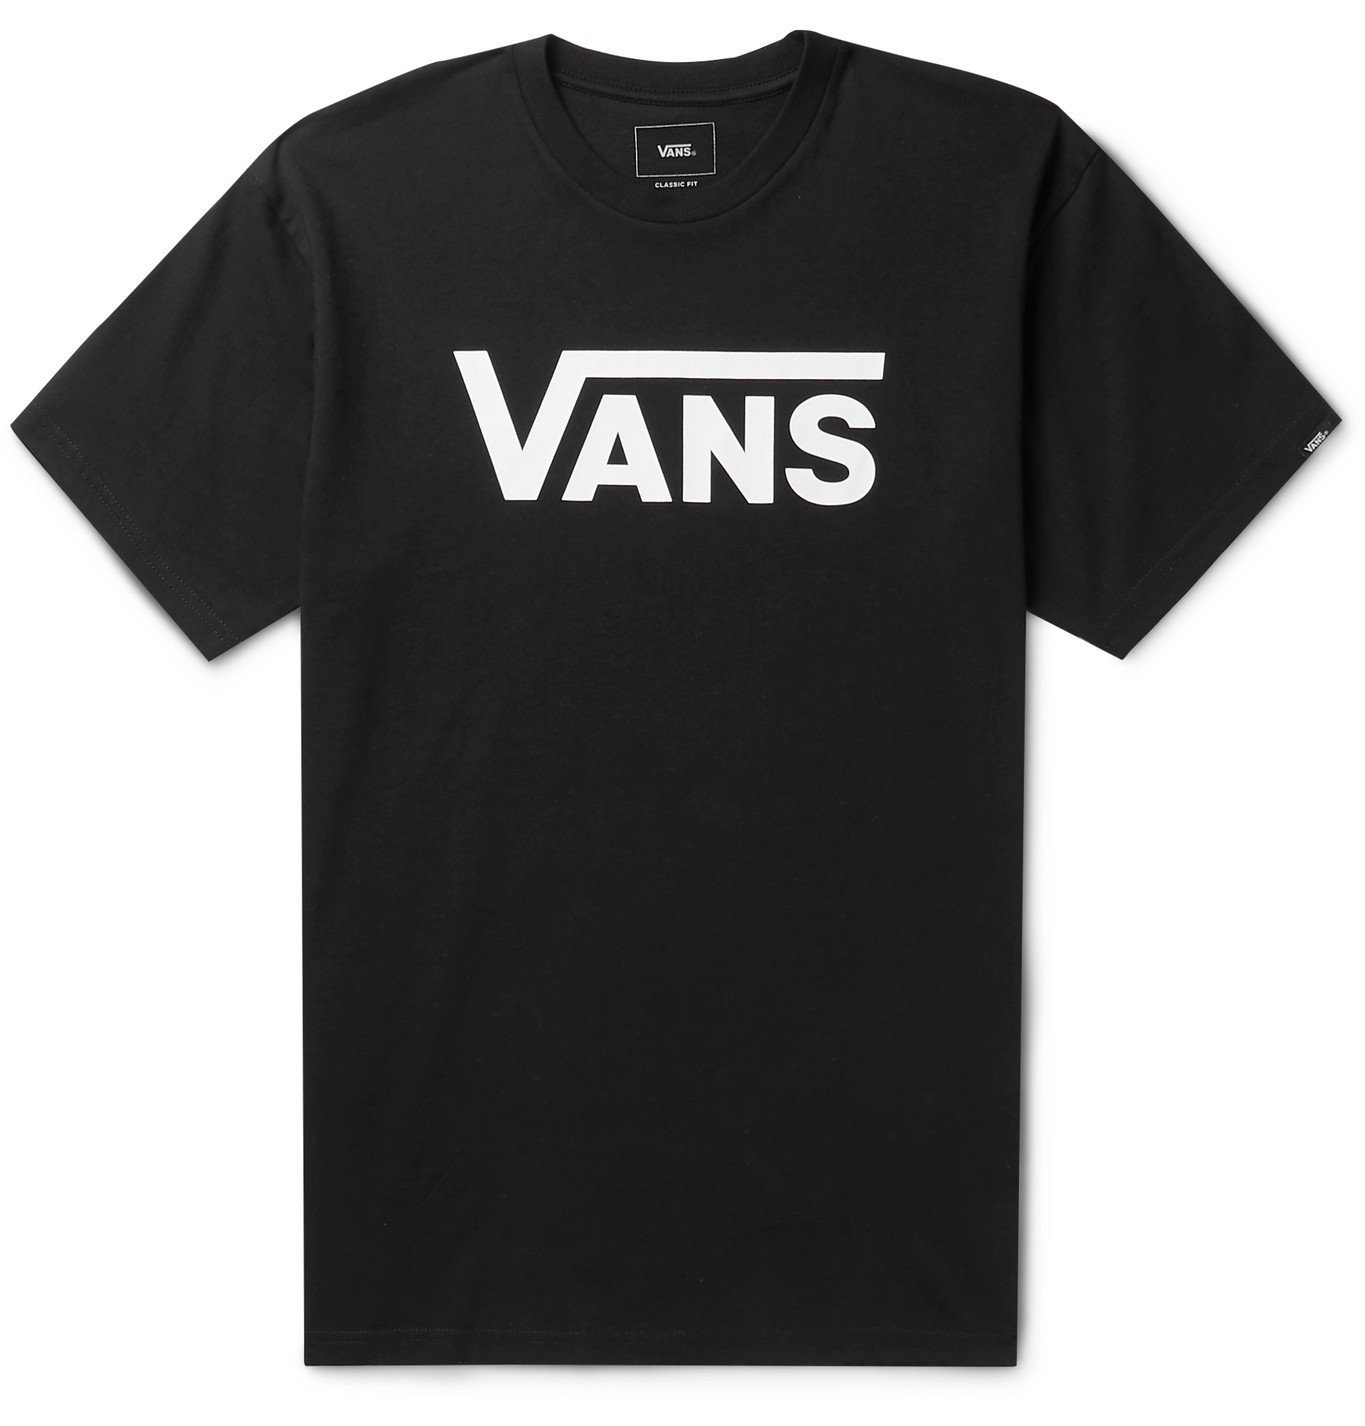 Vans - Logo-Print Cotton-Jersey T-Shirt - Black Vans